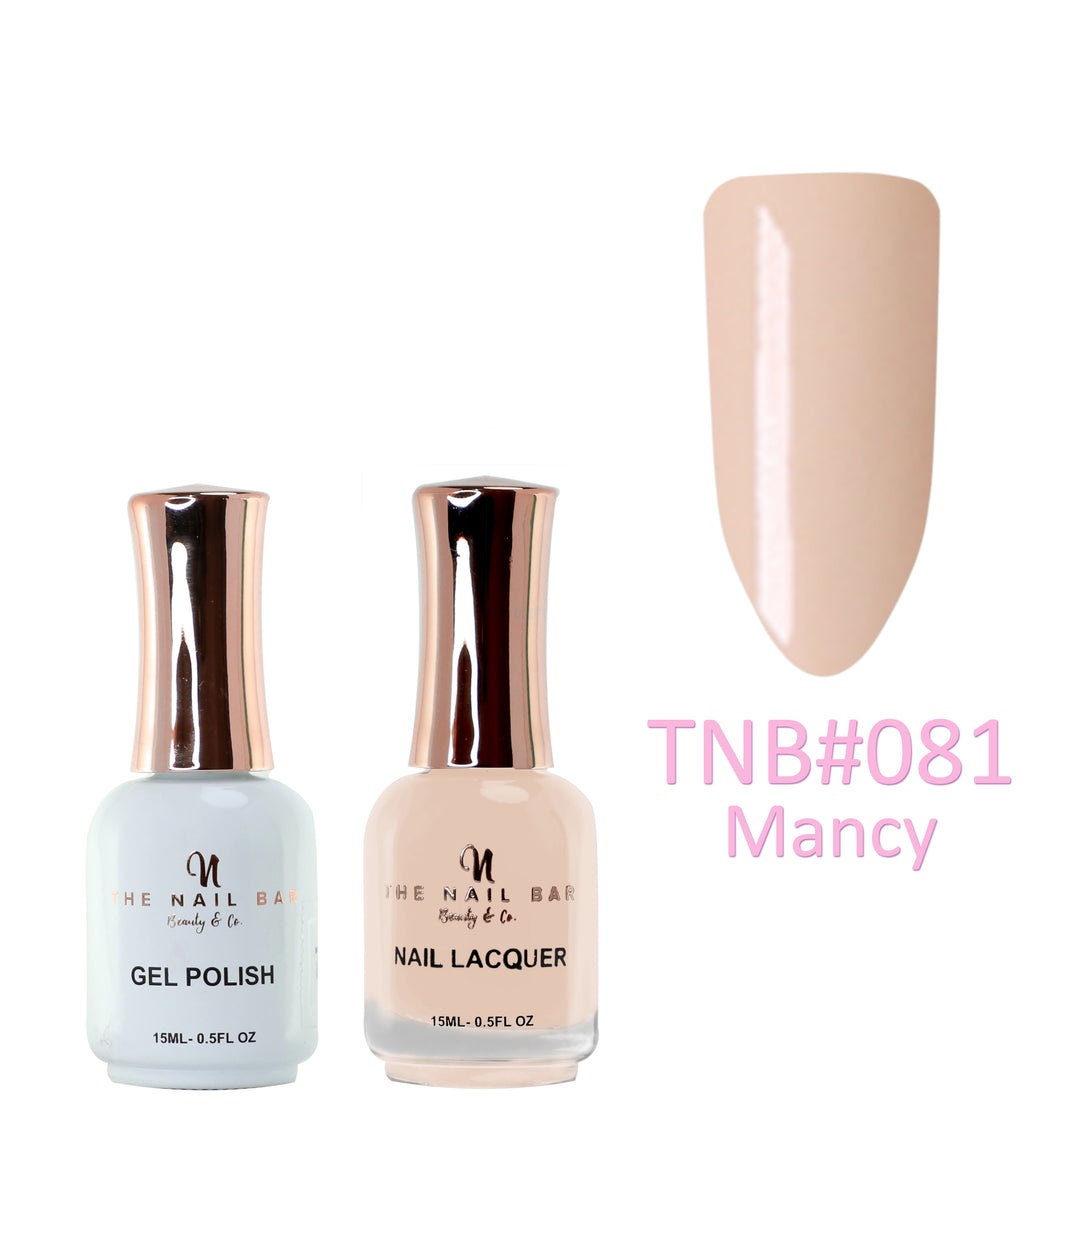 Dual Polish/Gel colour matching (15ml) - Mancy - The Nail Bar Beauty & Co.